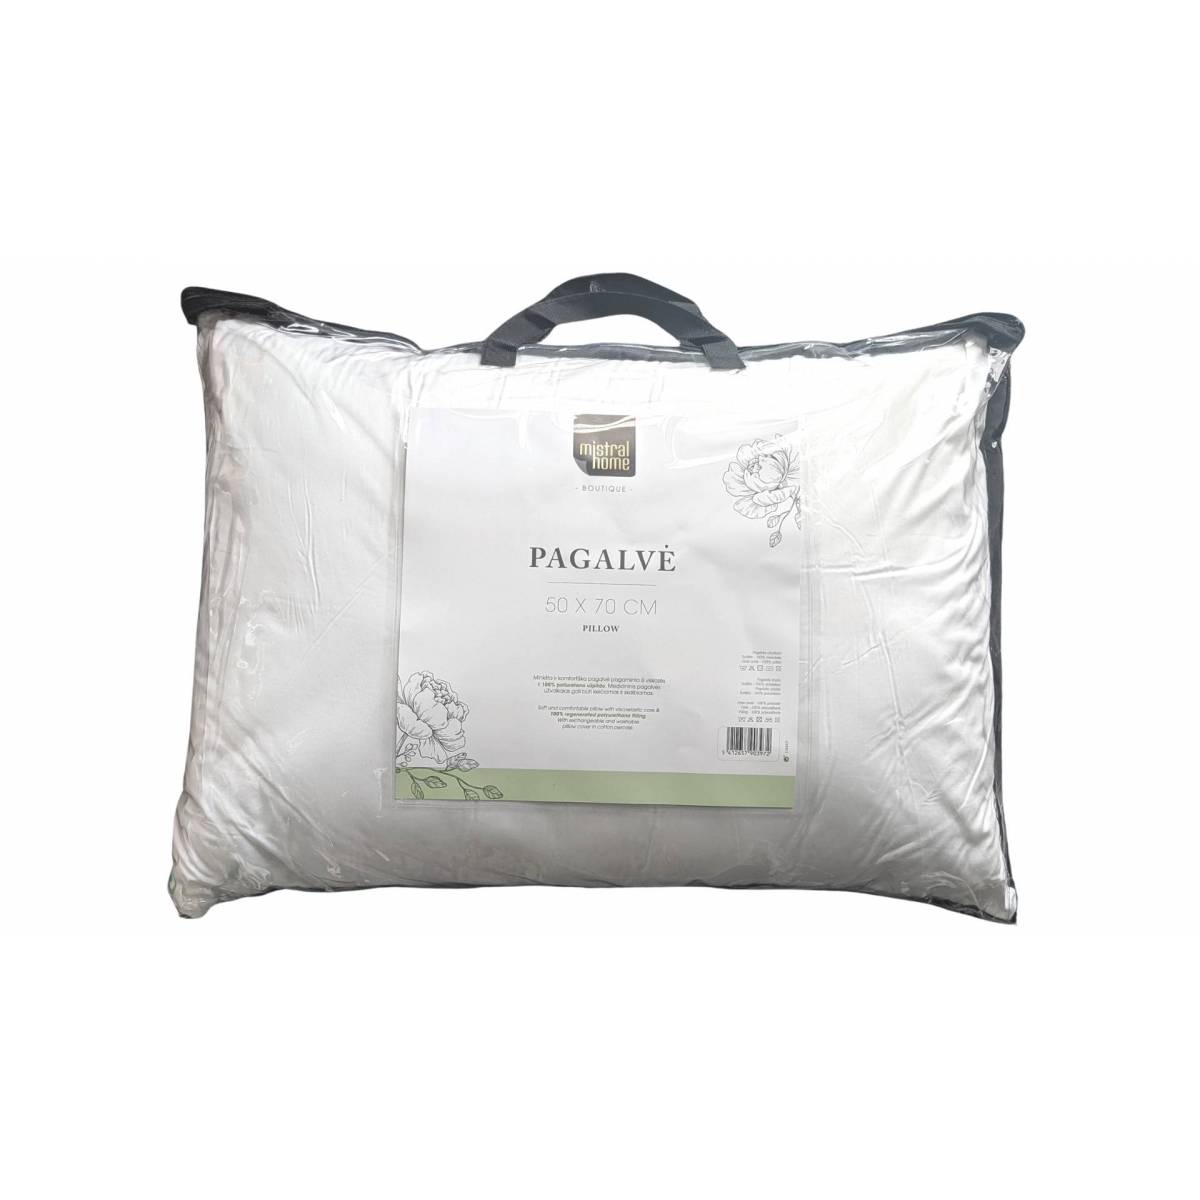 Mistral Home pillow 50 x 70 cm